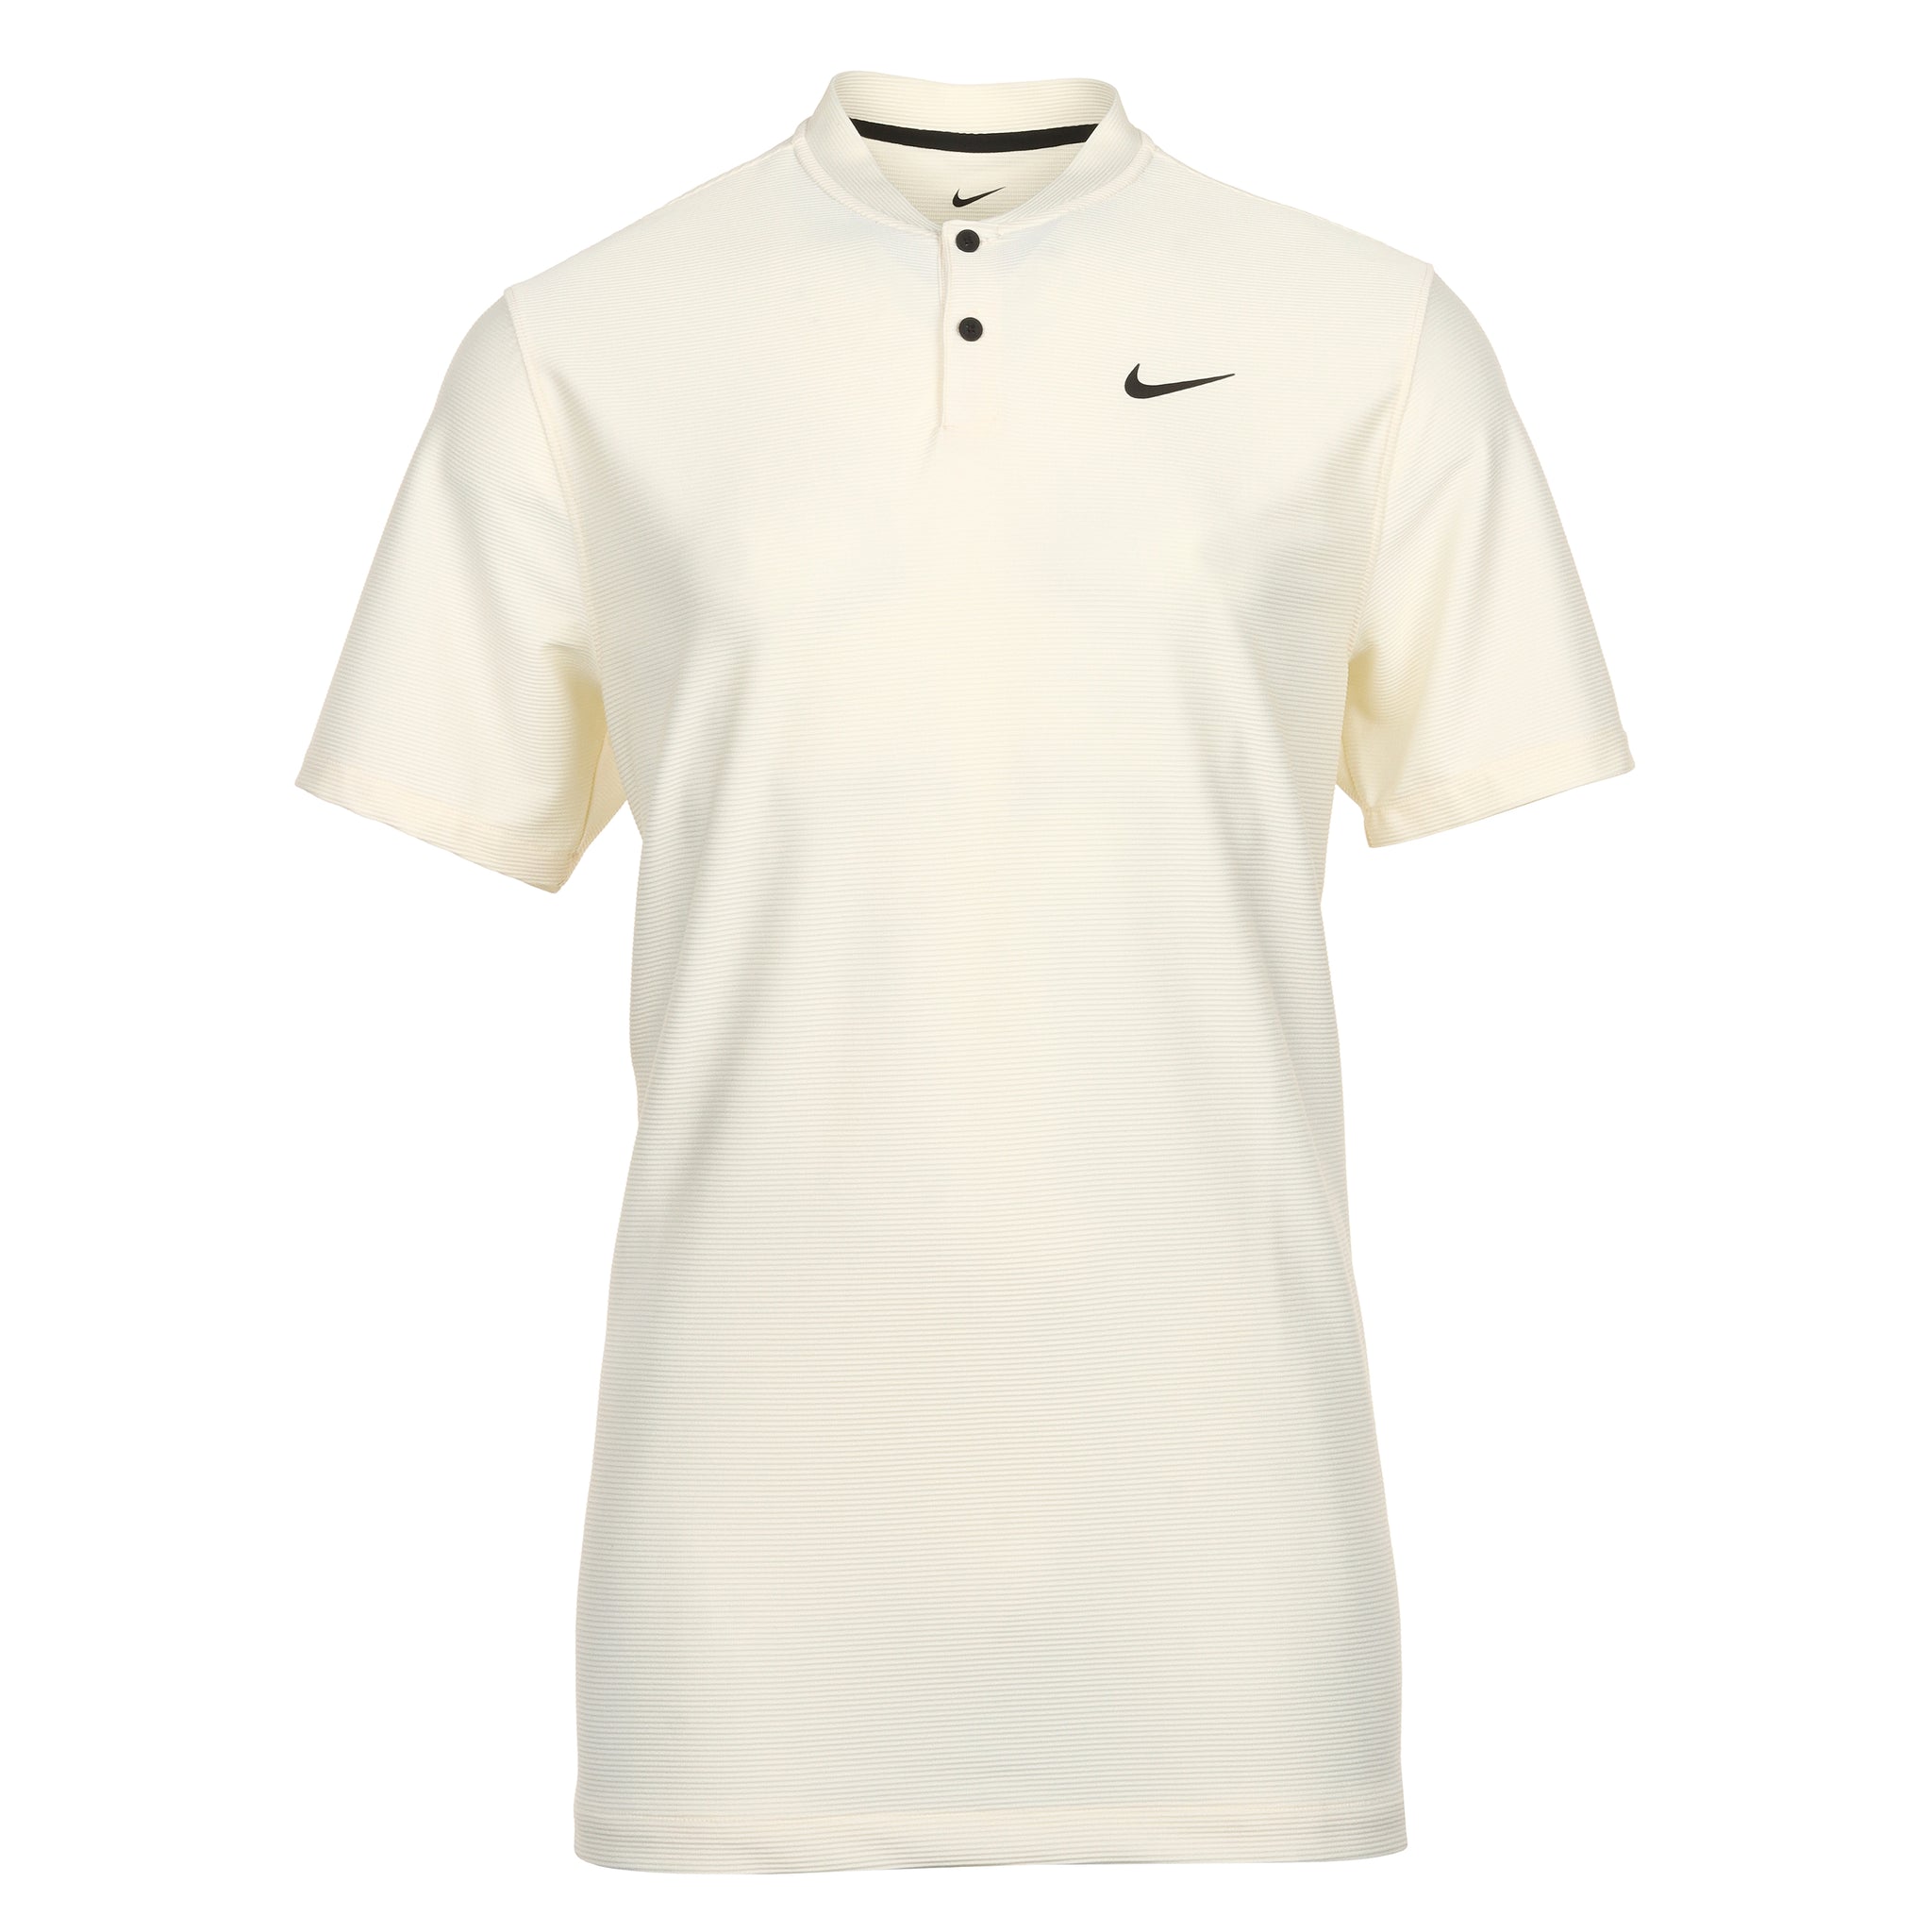 nike-golf-dri-fit-tour-texture-shirt-fj7035-113-cocnut-milk